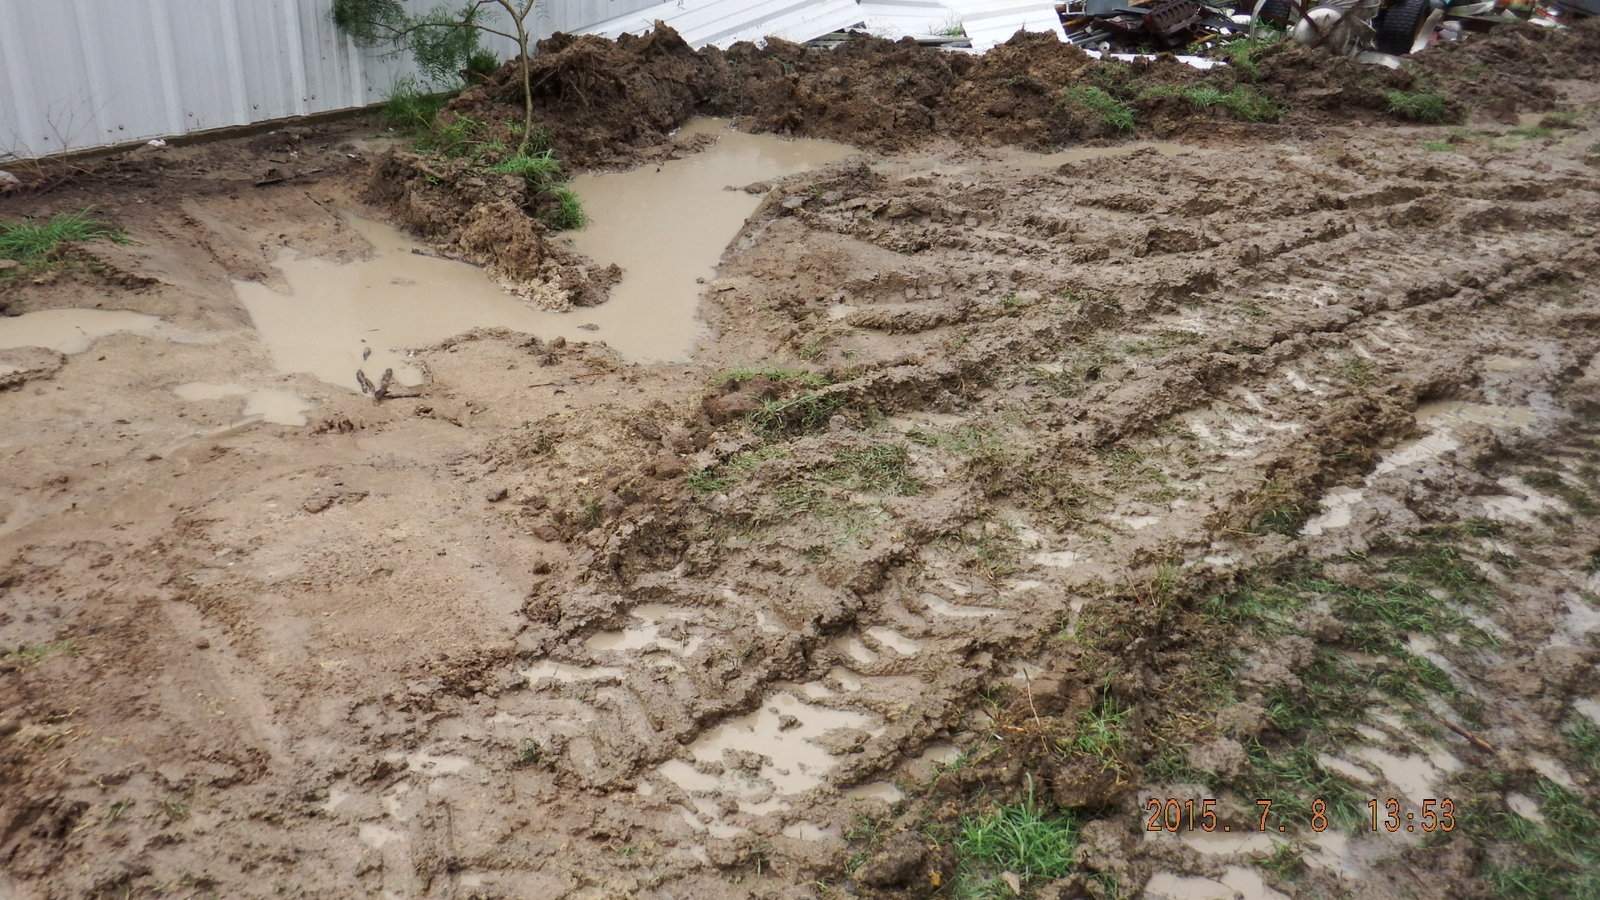 7_8_2015 5 Mud Hole made by the Kubota Tractor to Drain 7 inch rain fall.JPG